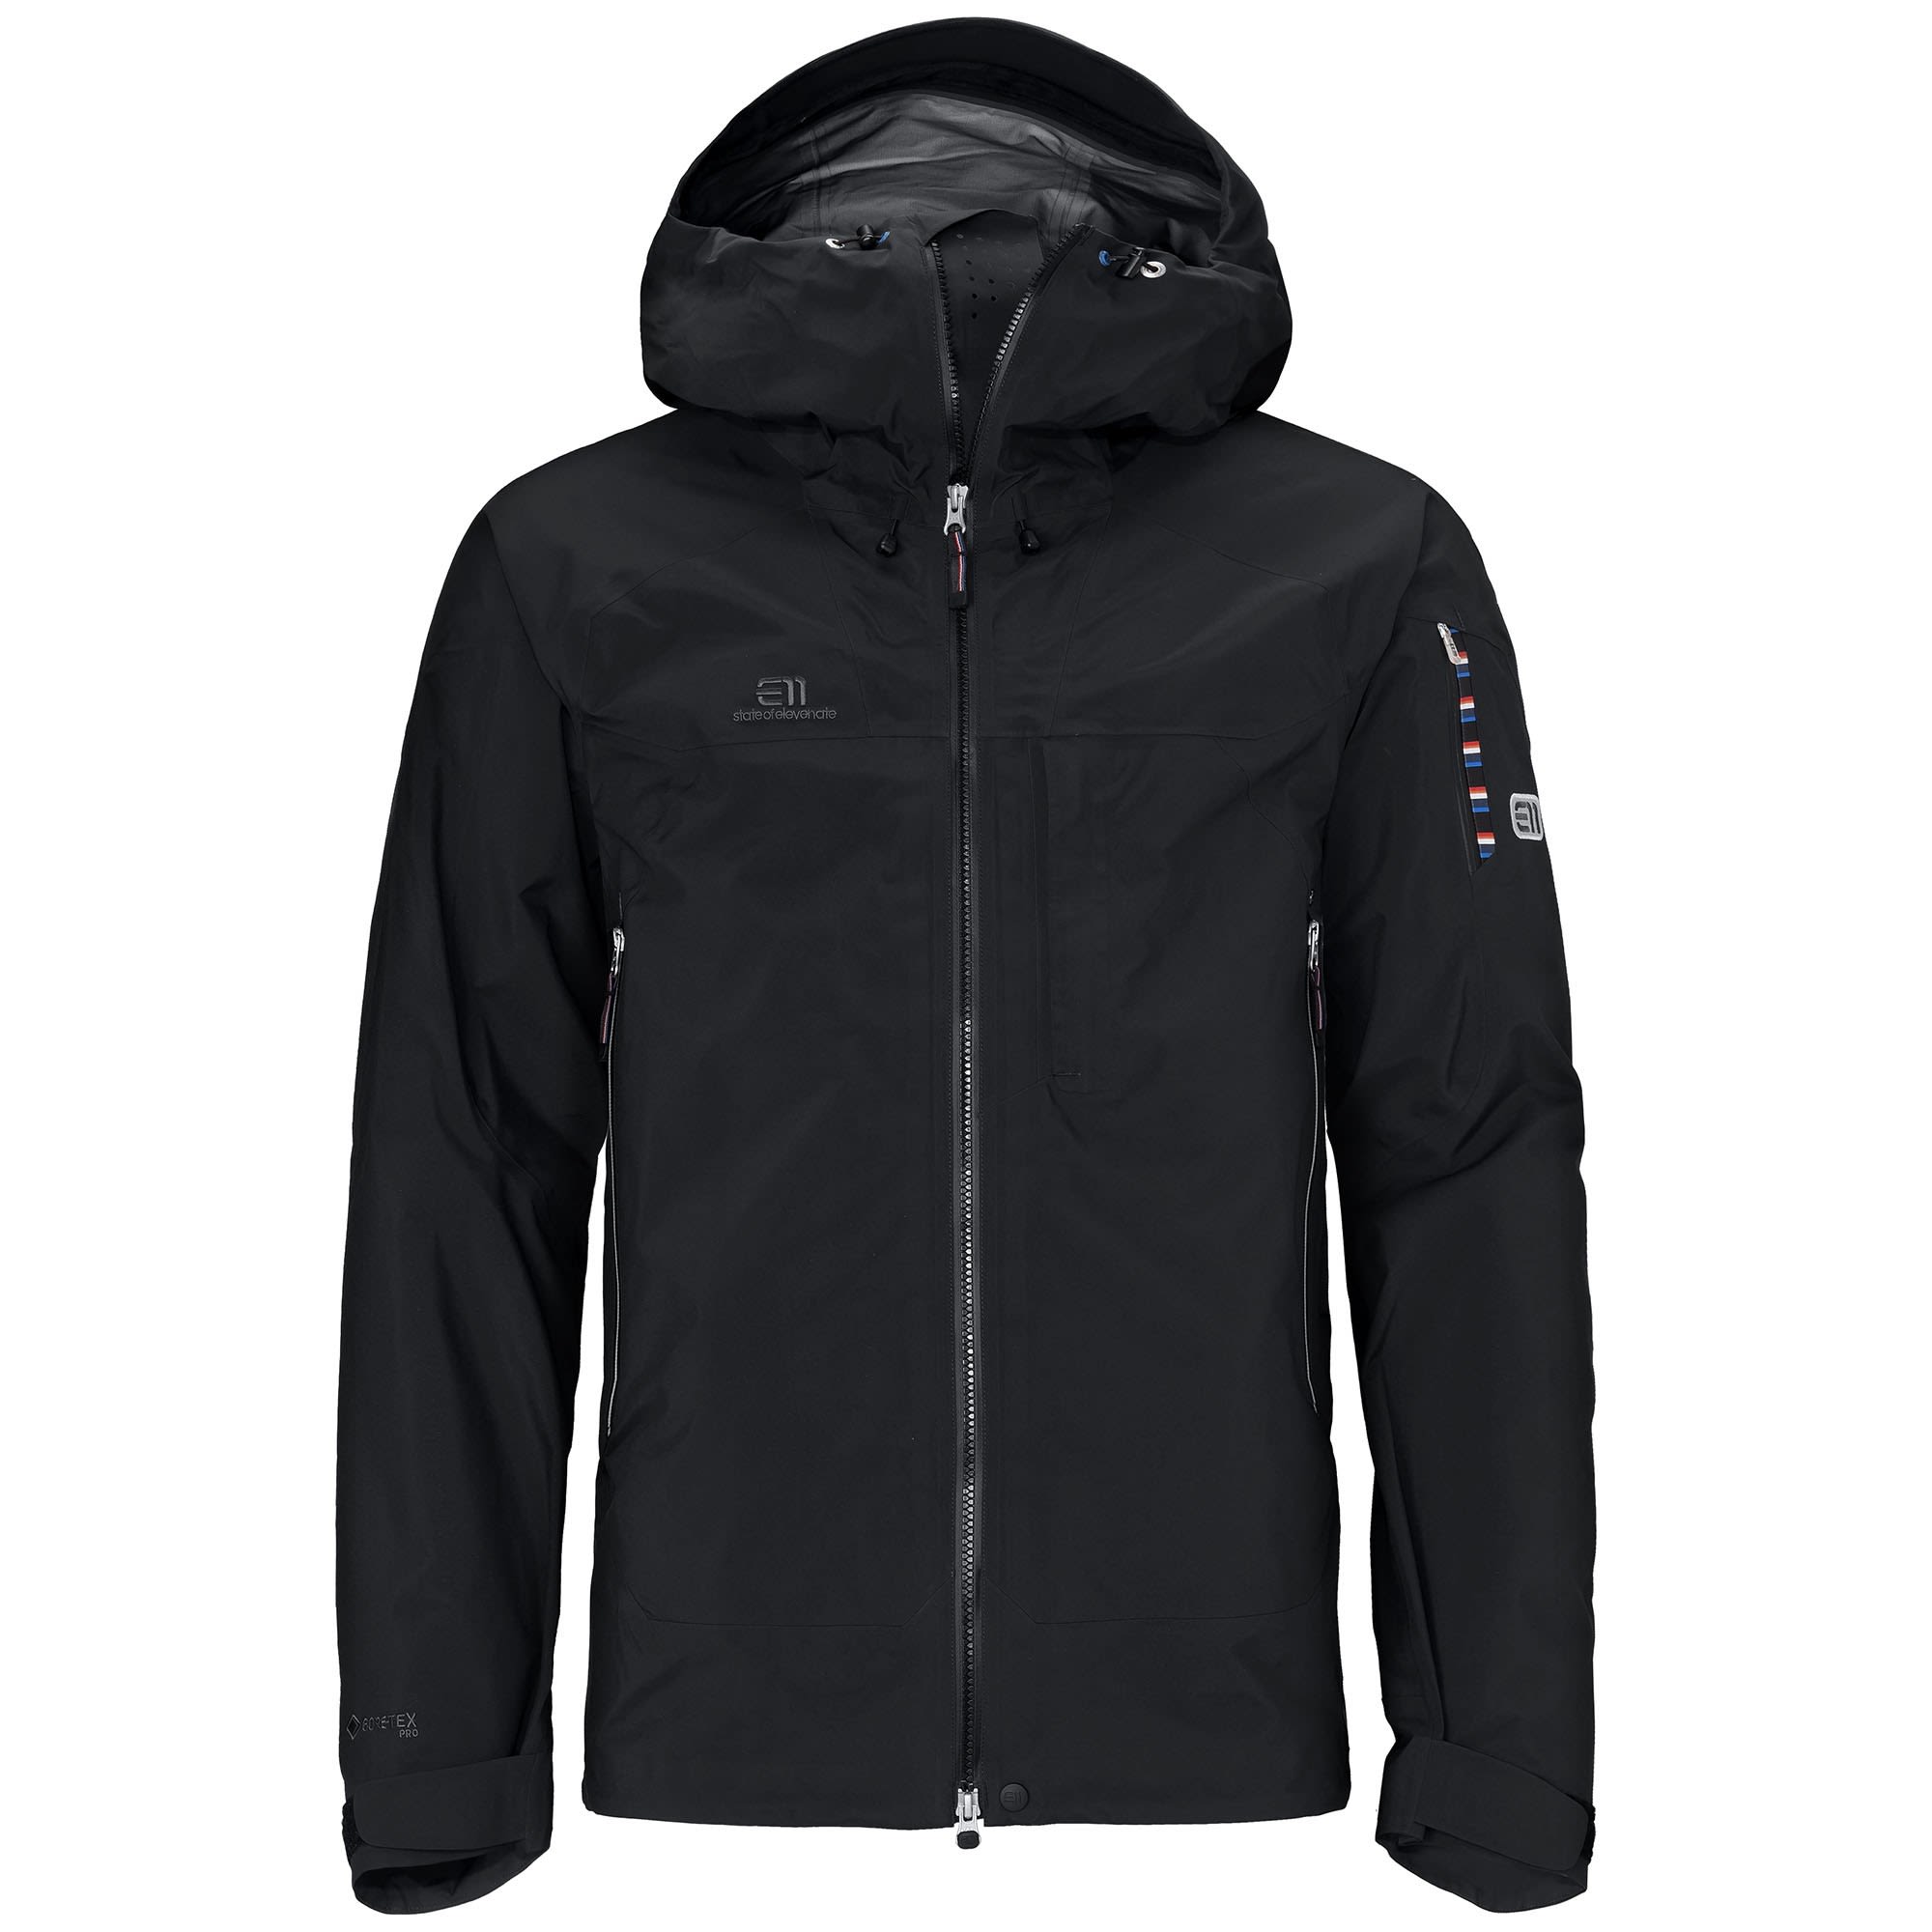 Elevenate BEC DE Rosses Jacket Schwarz- Male Gore-Tex(R) Anoraks- Grsse M - Farbe Black